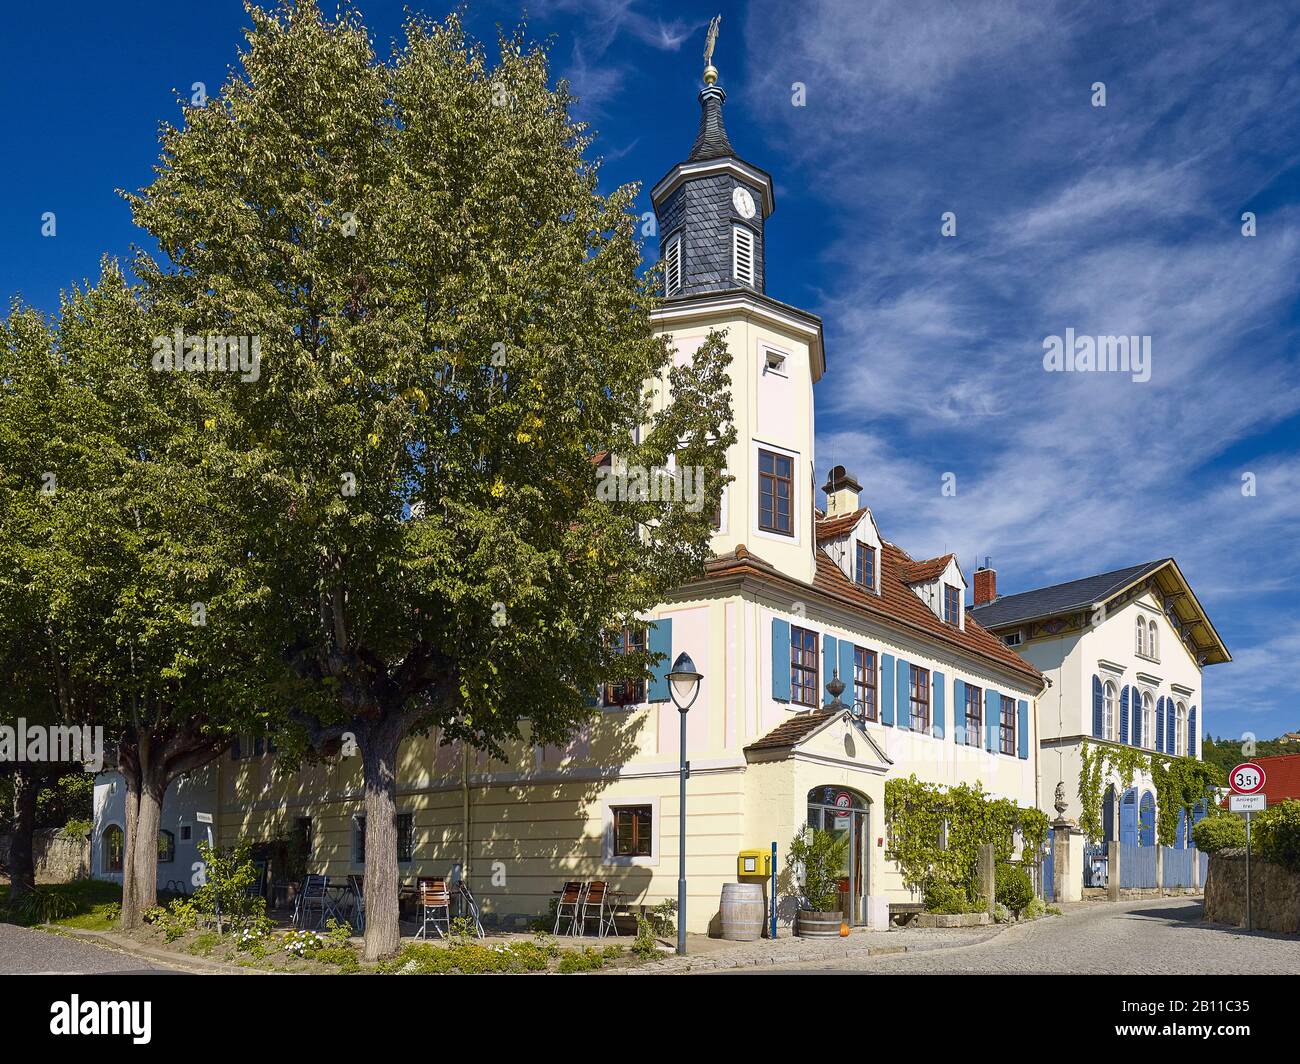 Meinholdsches tower house, Radebeul, Saxony, Germany Stock Photo